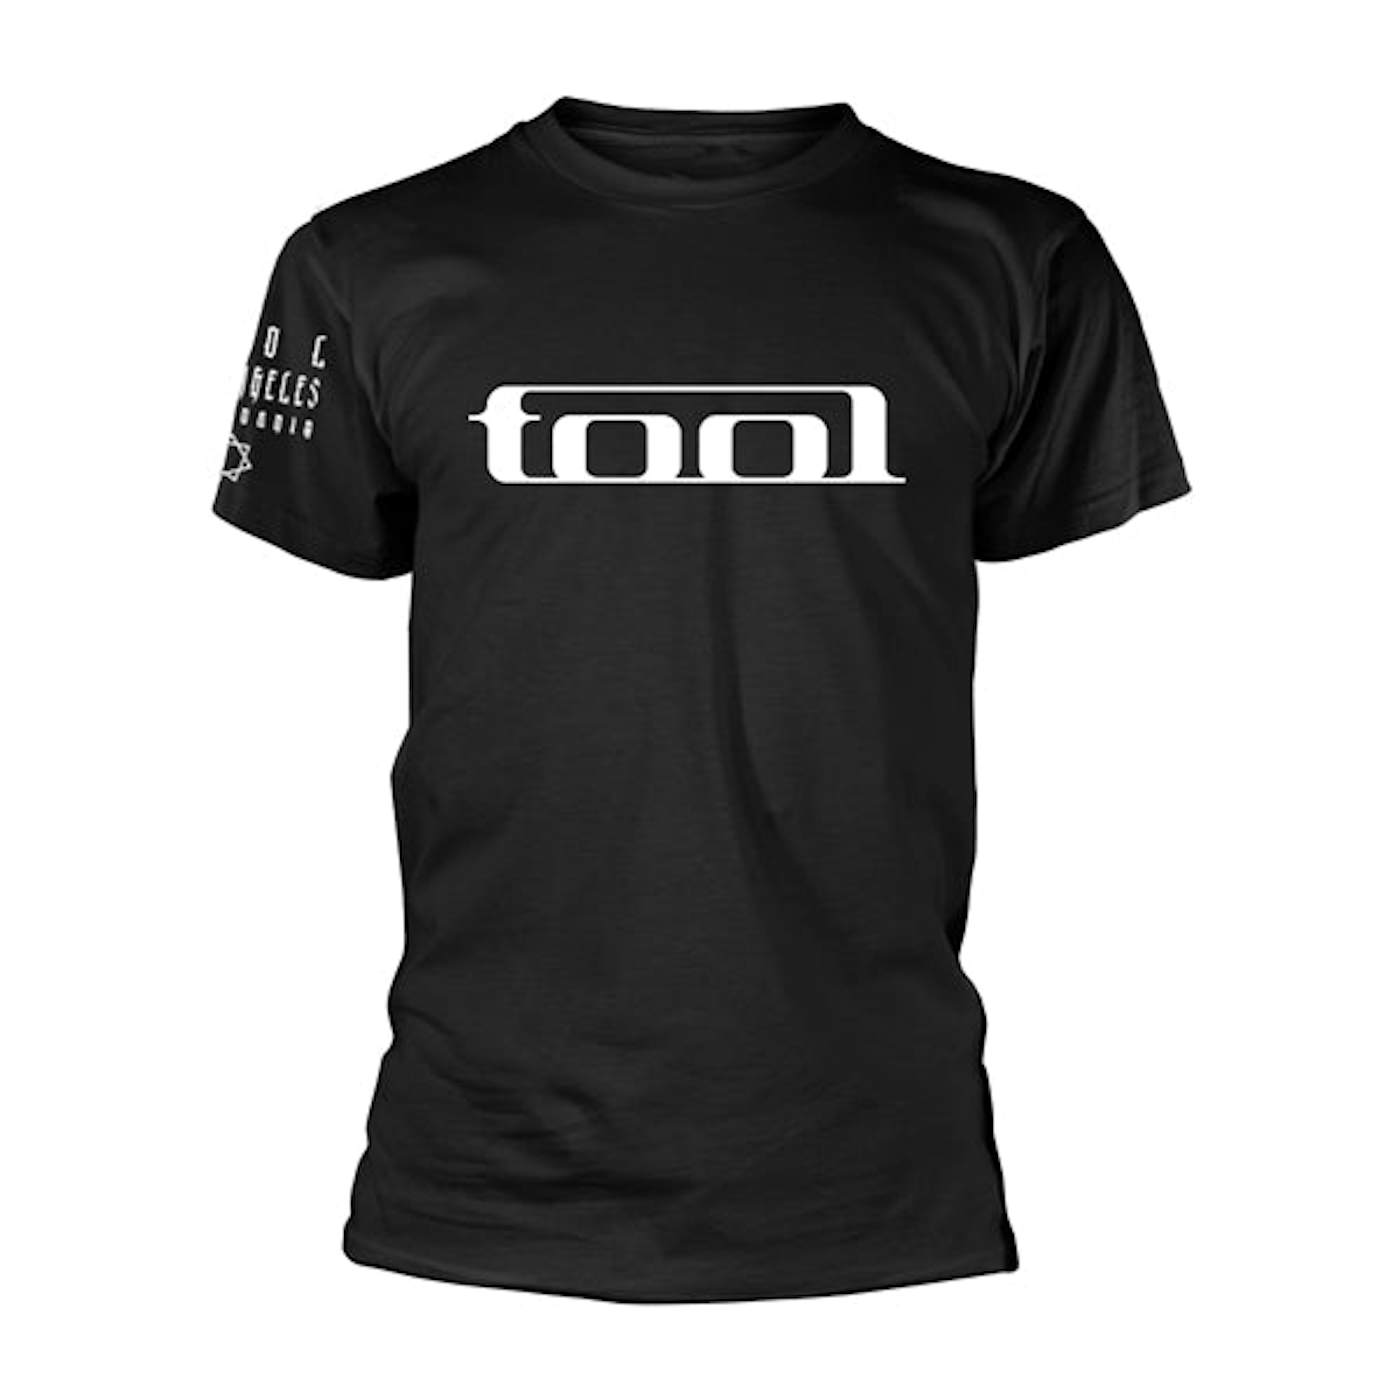 Tool Merch Store, Tool shirts, Tool Vinyl Records, Tool CDs